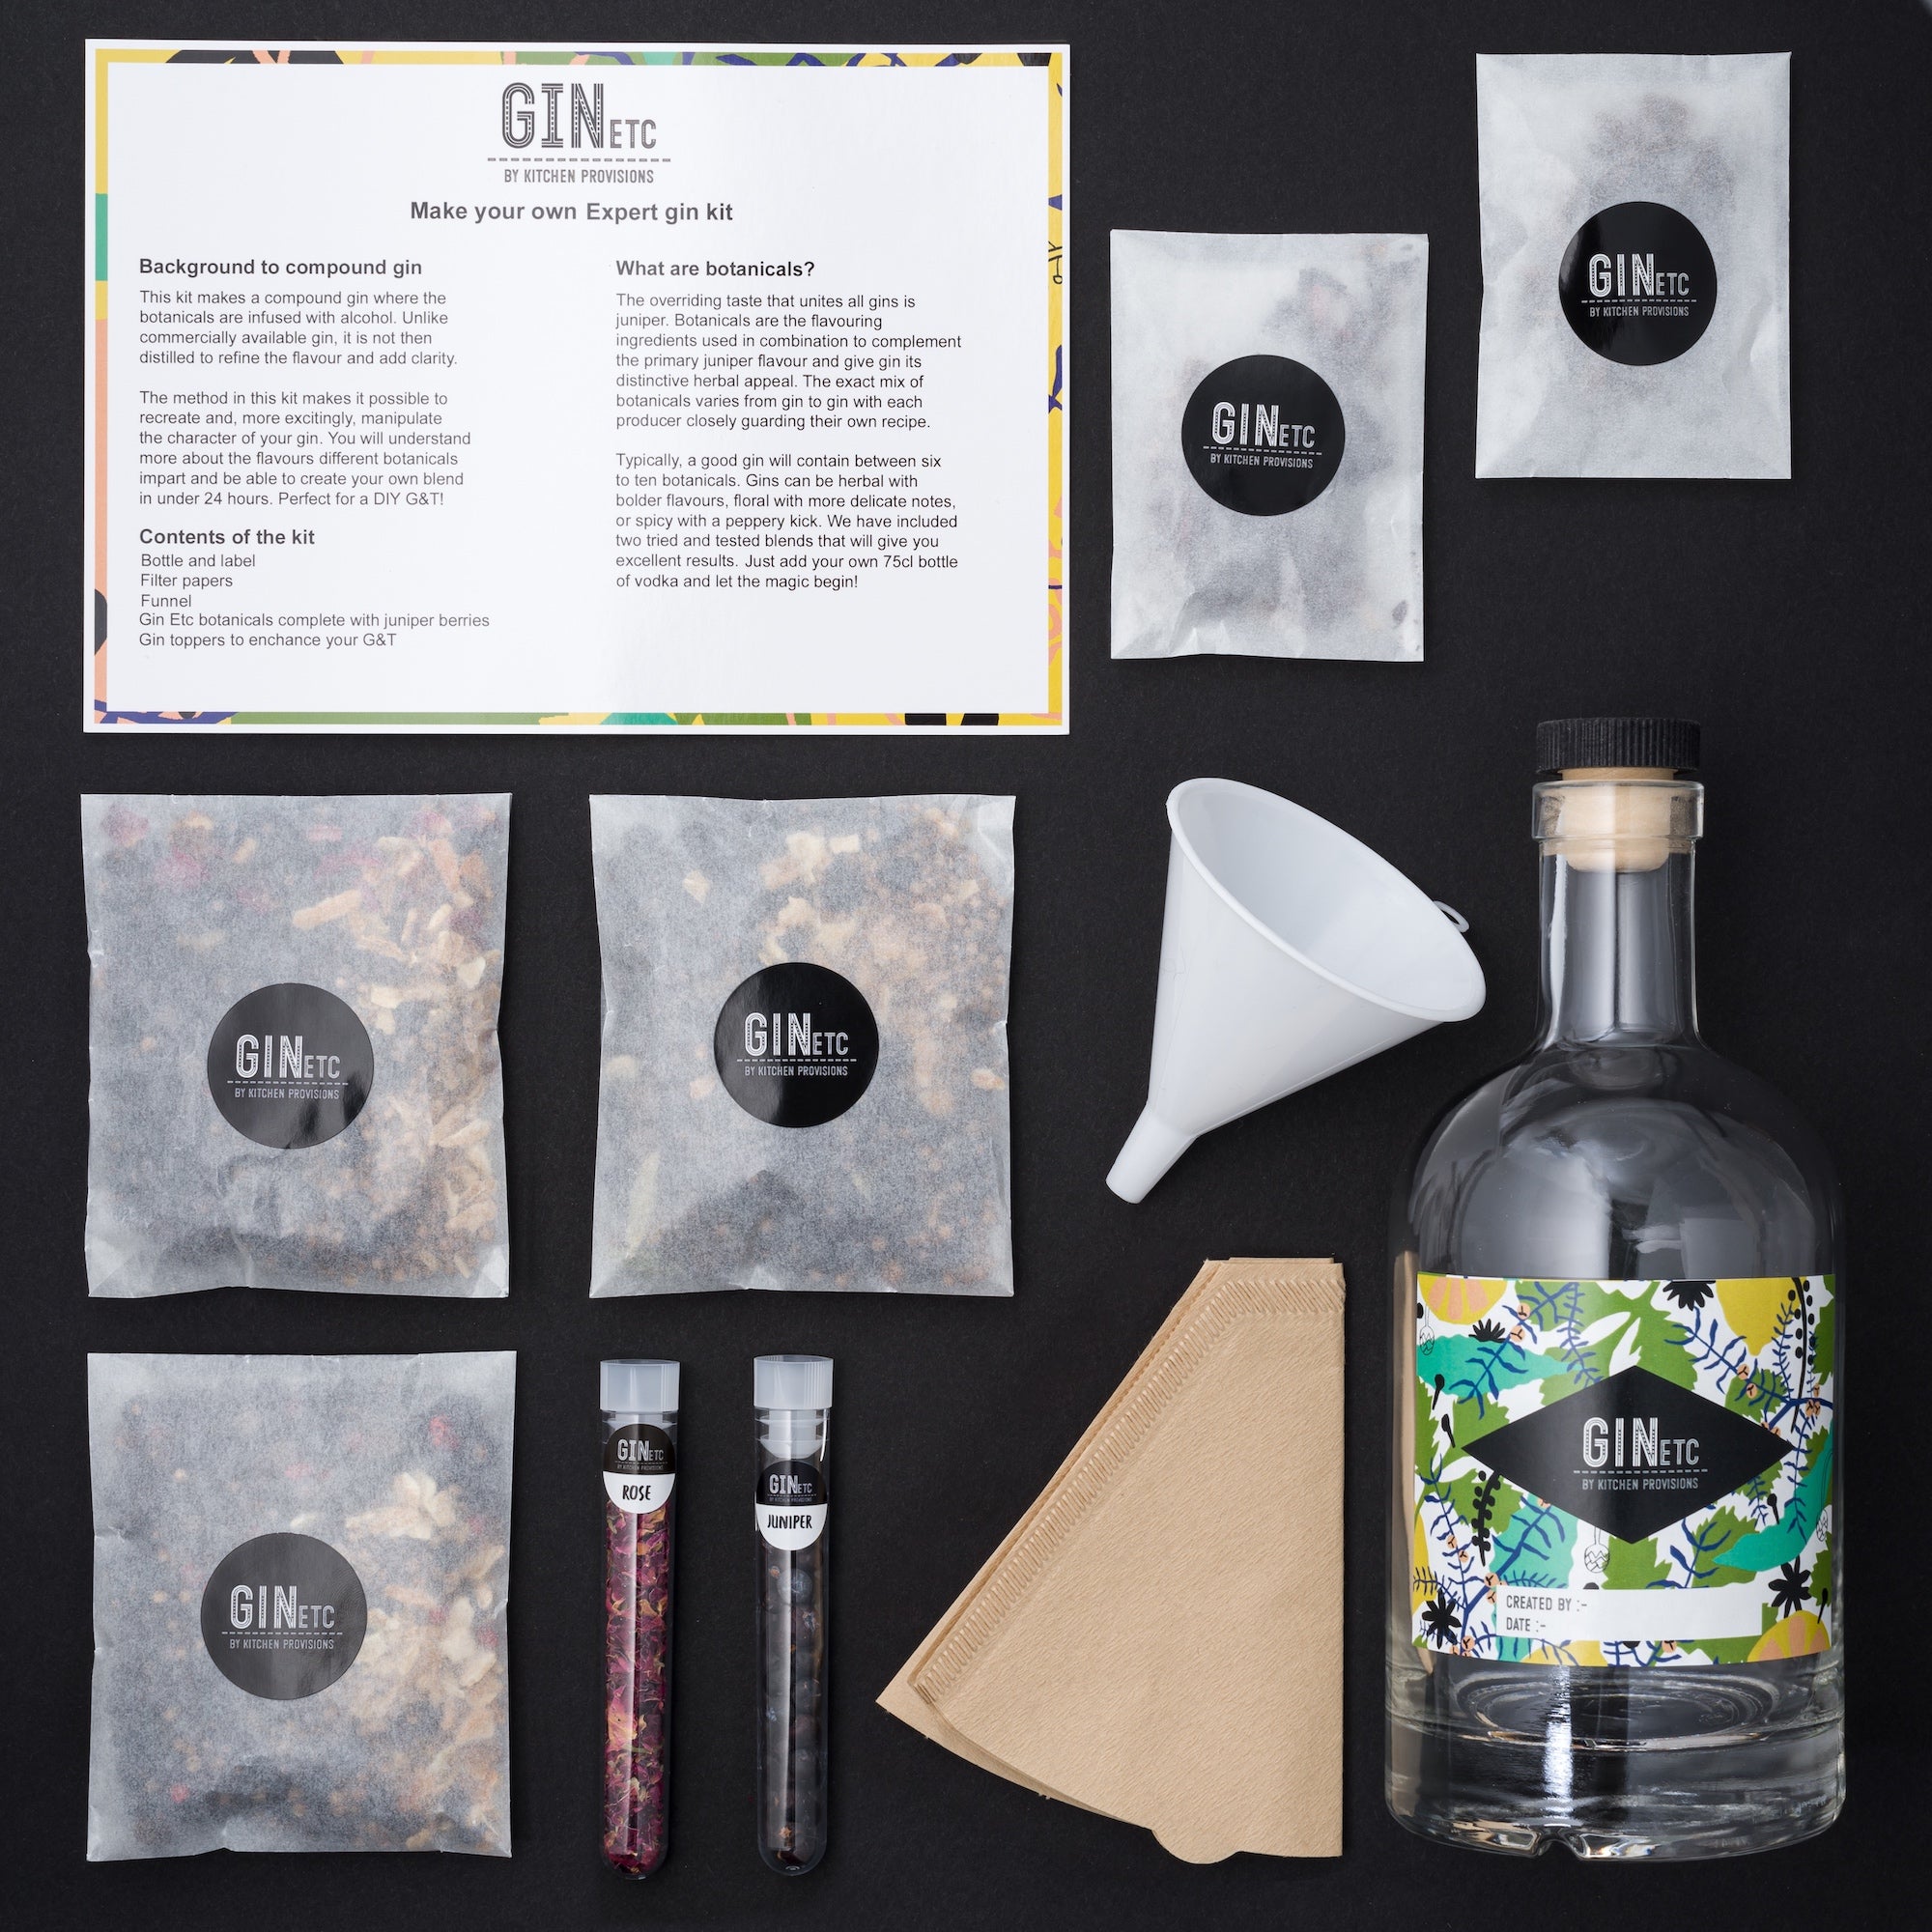 Gin Etc. Gin Maker's Kit - The Expert Create your own Blended Gin